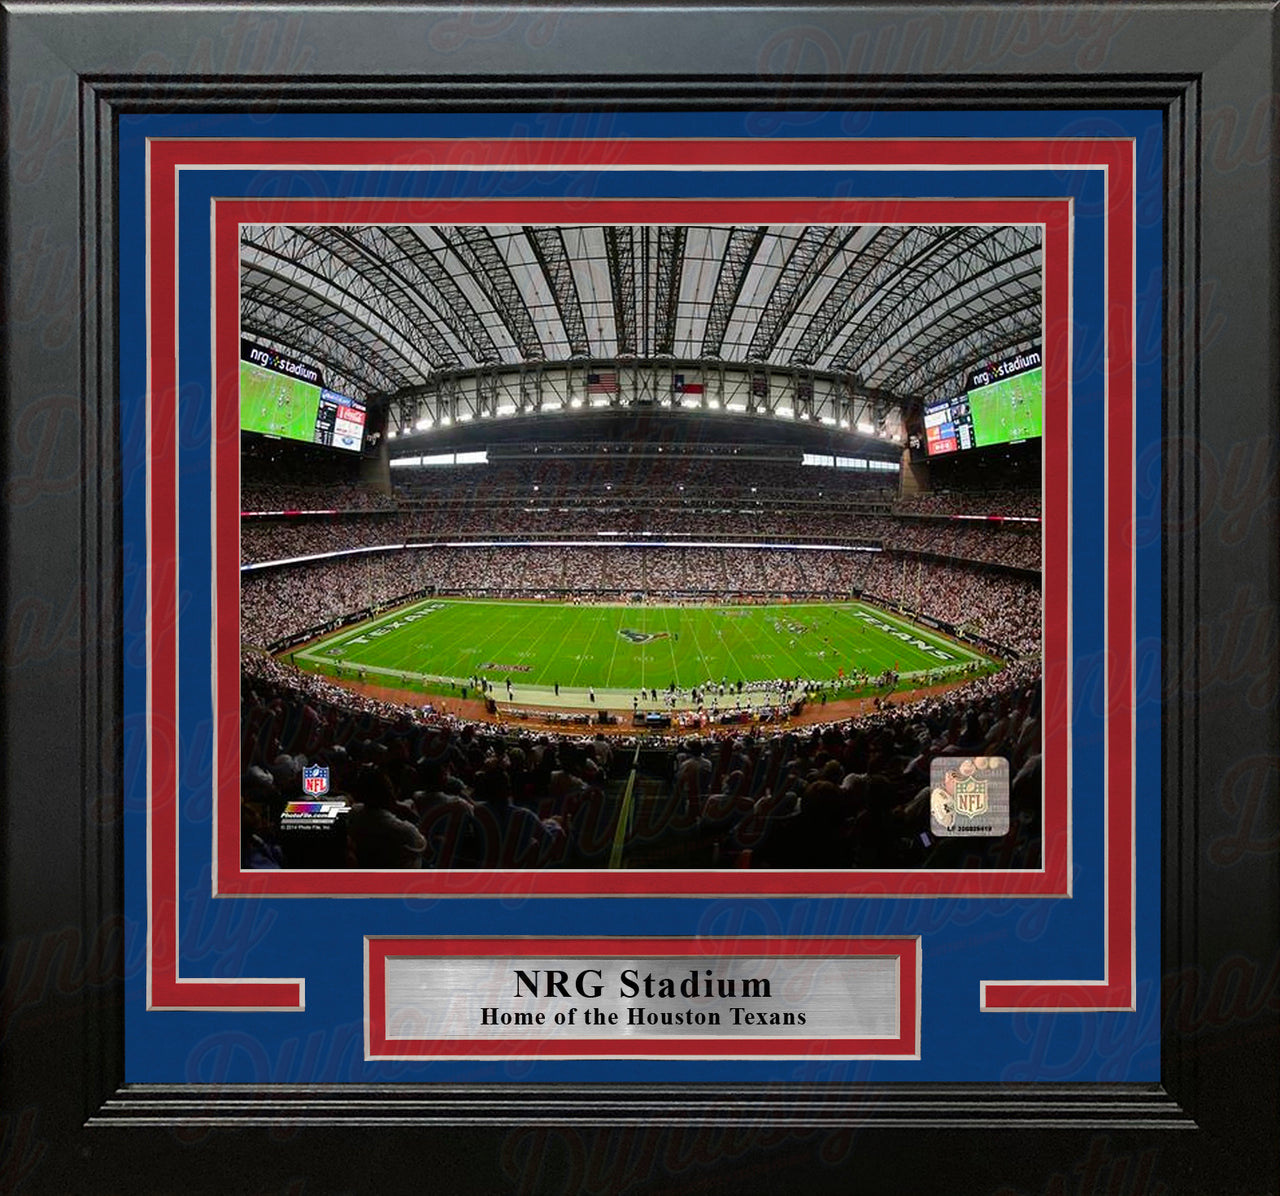 Houston Texans NRG Stadium NFL Football 8" x 10" Framed Photo - Dynasty Sports & Framing 